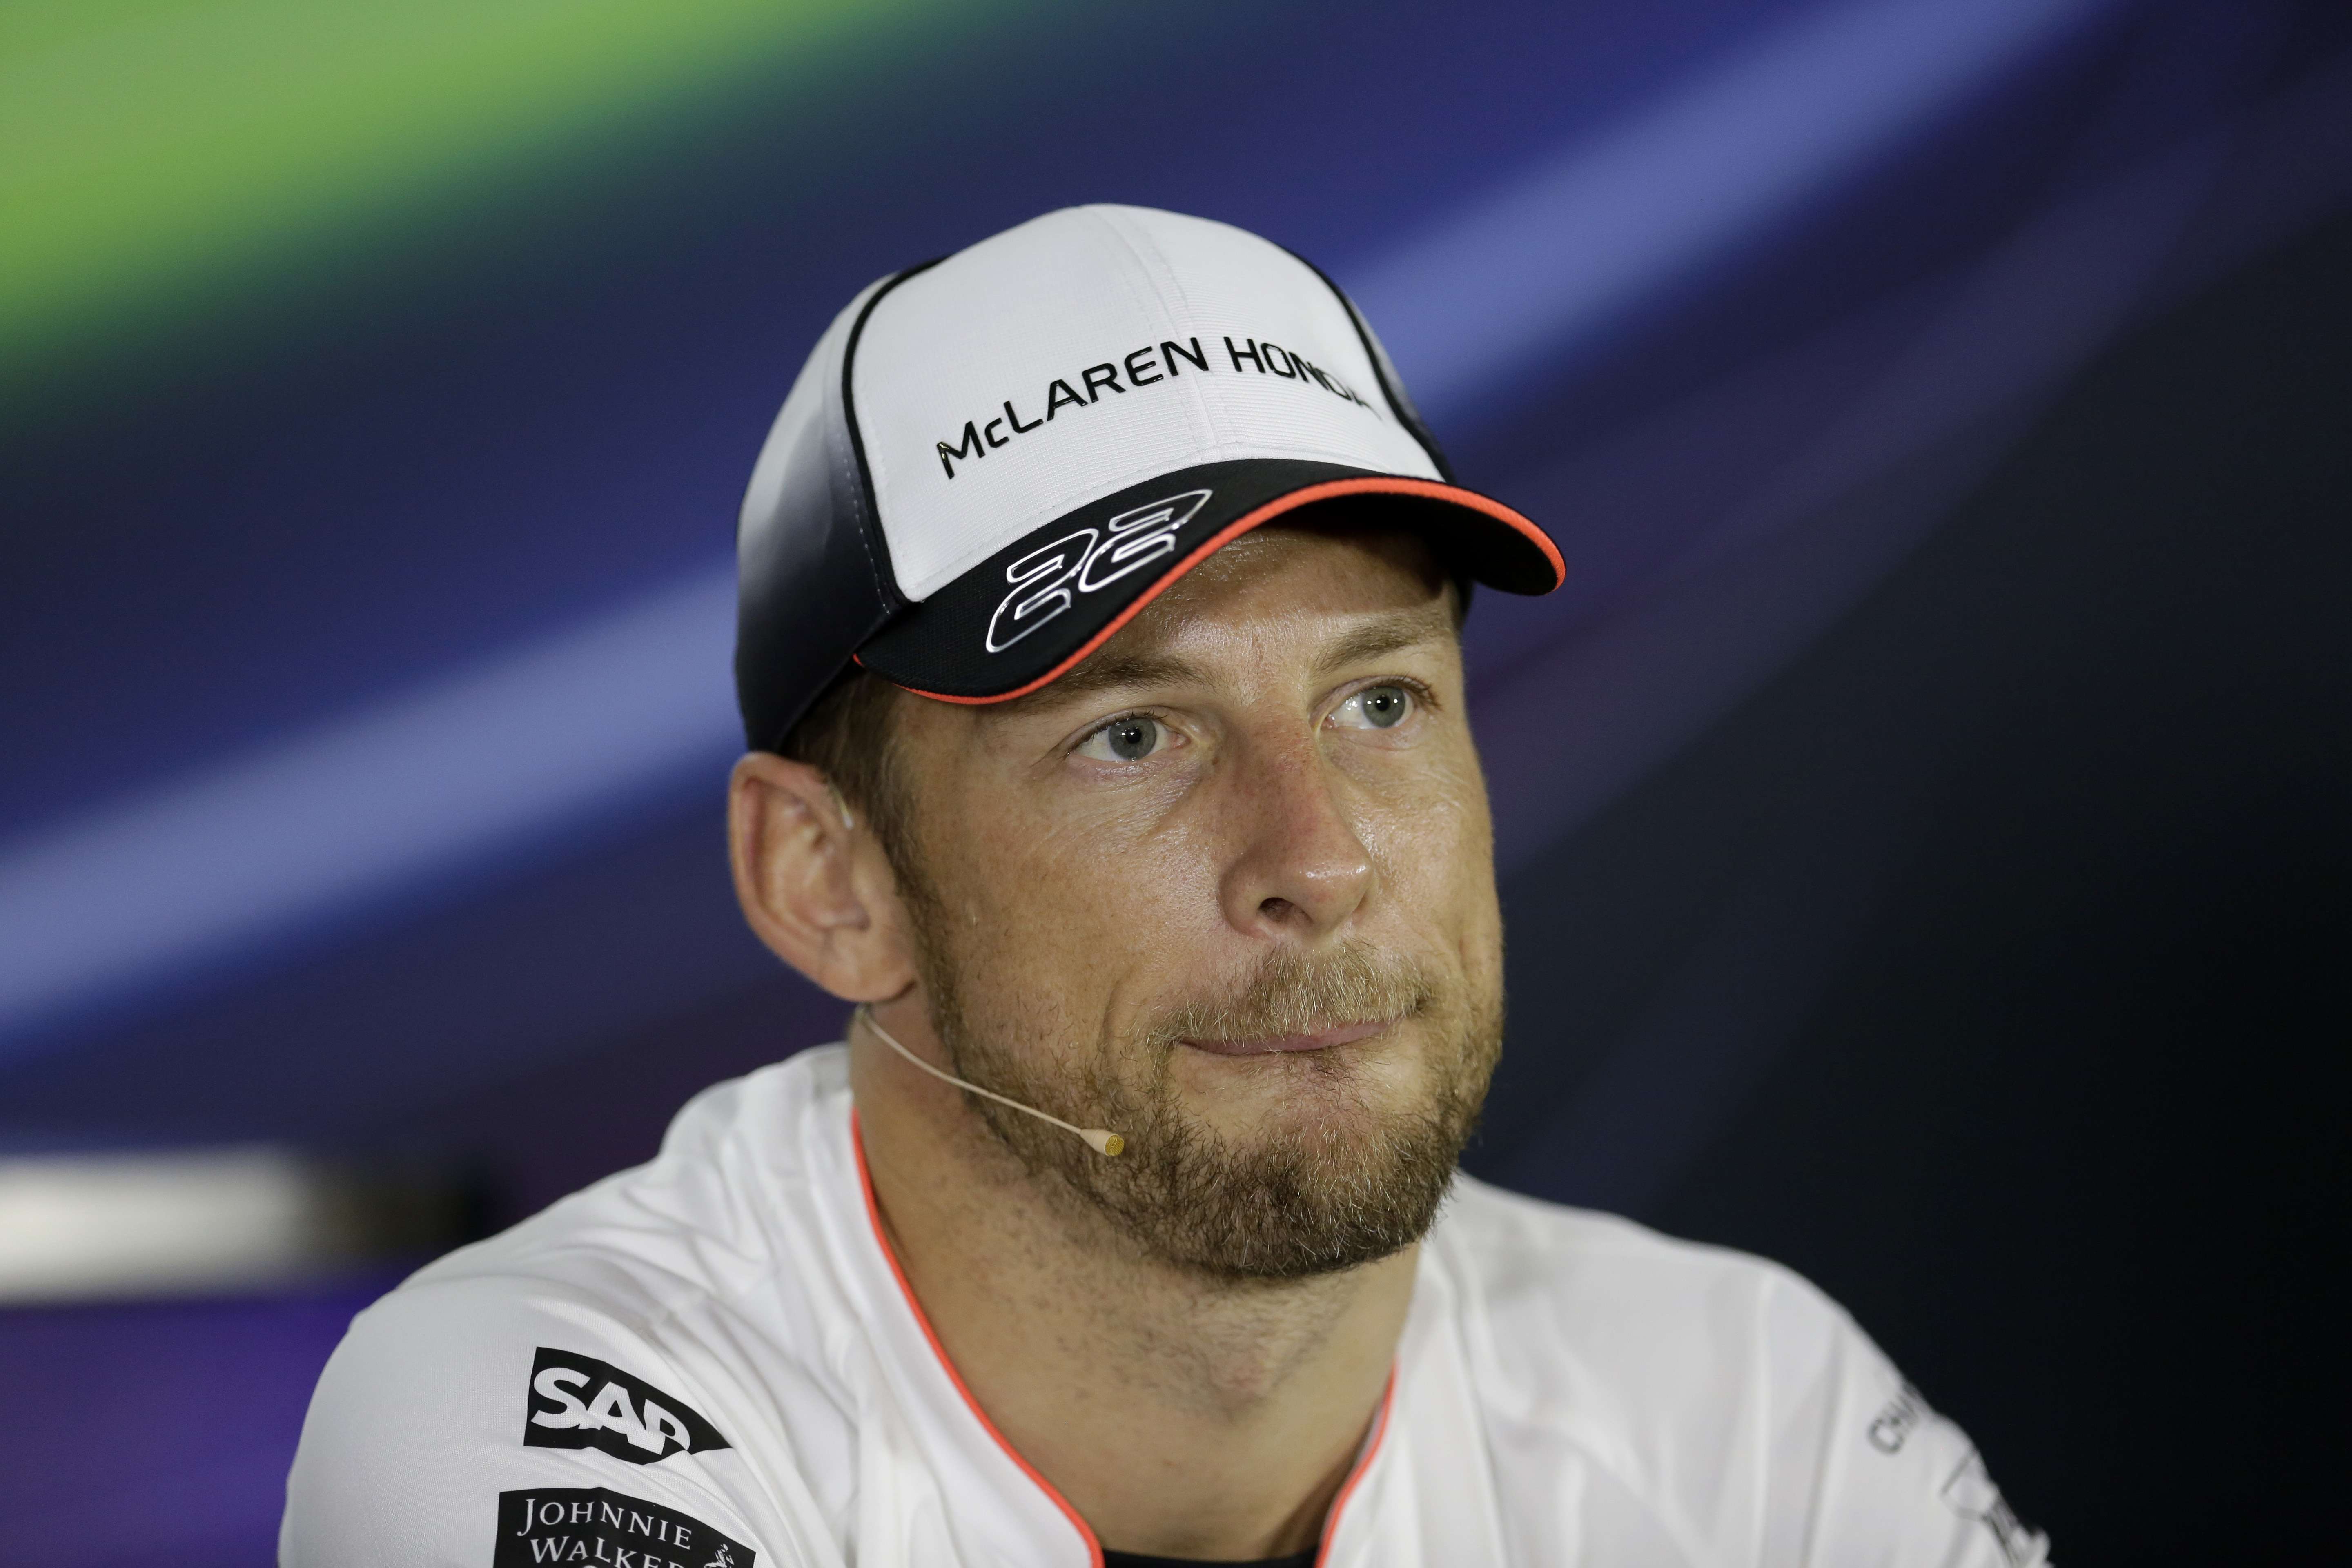 McLaren driver Jenson Button announces his retirement at a press conference in Abu Dhabi on Thursday. Photo: AP